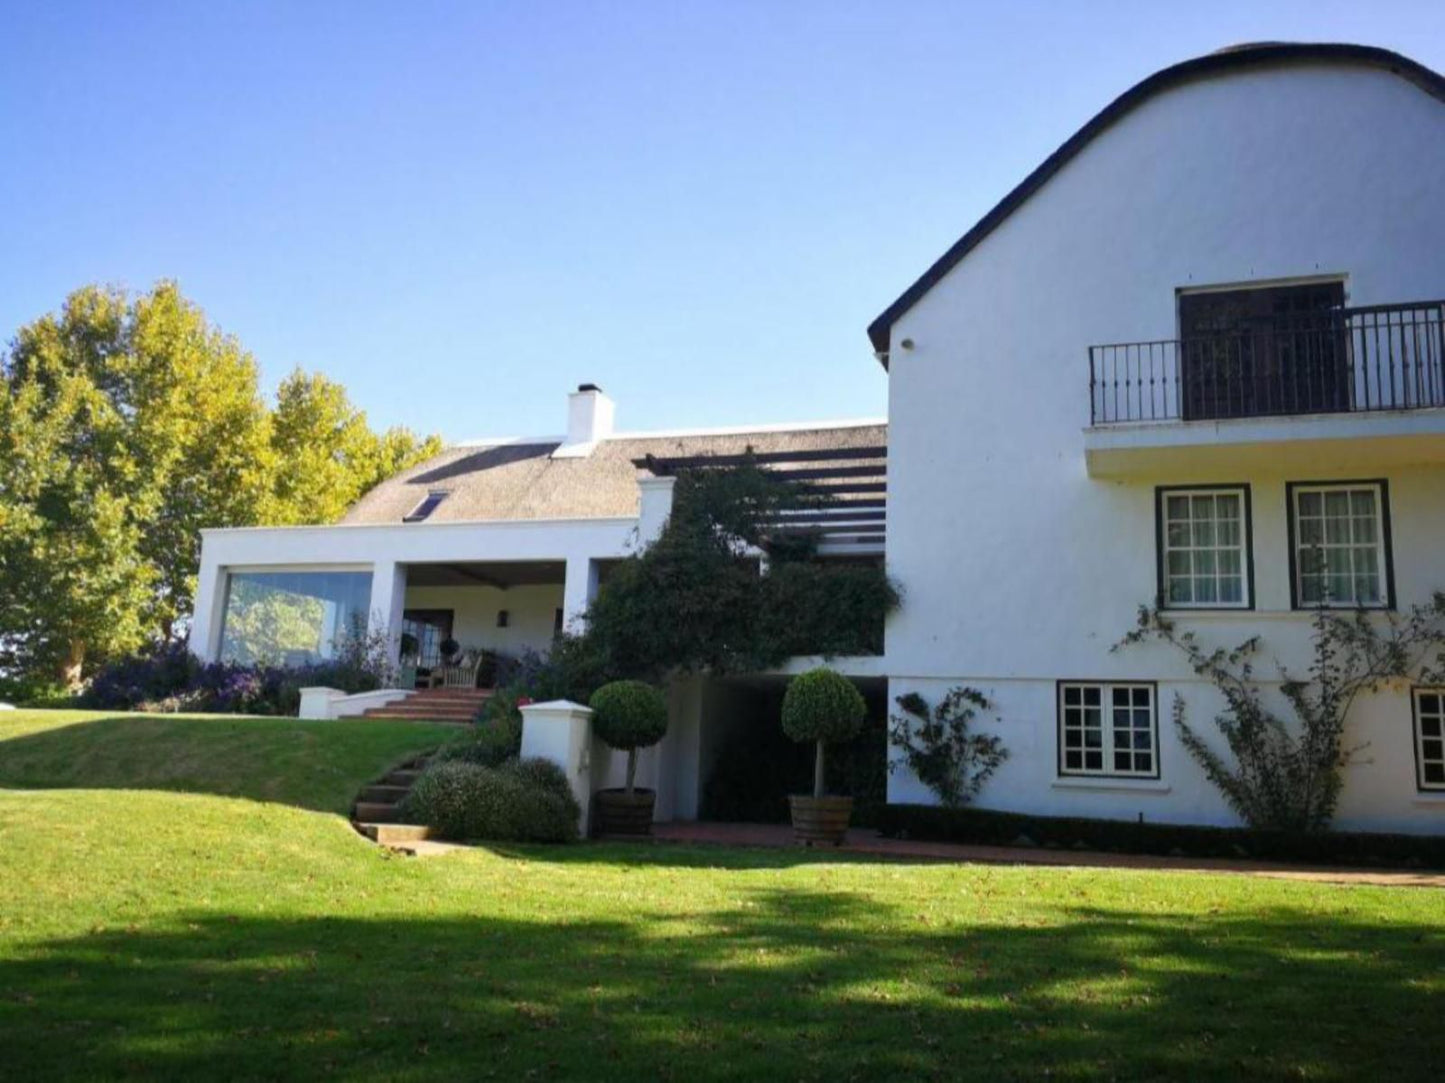 Gemoedsrus Farm Stellenbosch Western Cape South Africa Complementary Colors, Building, Architecture, House